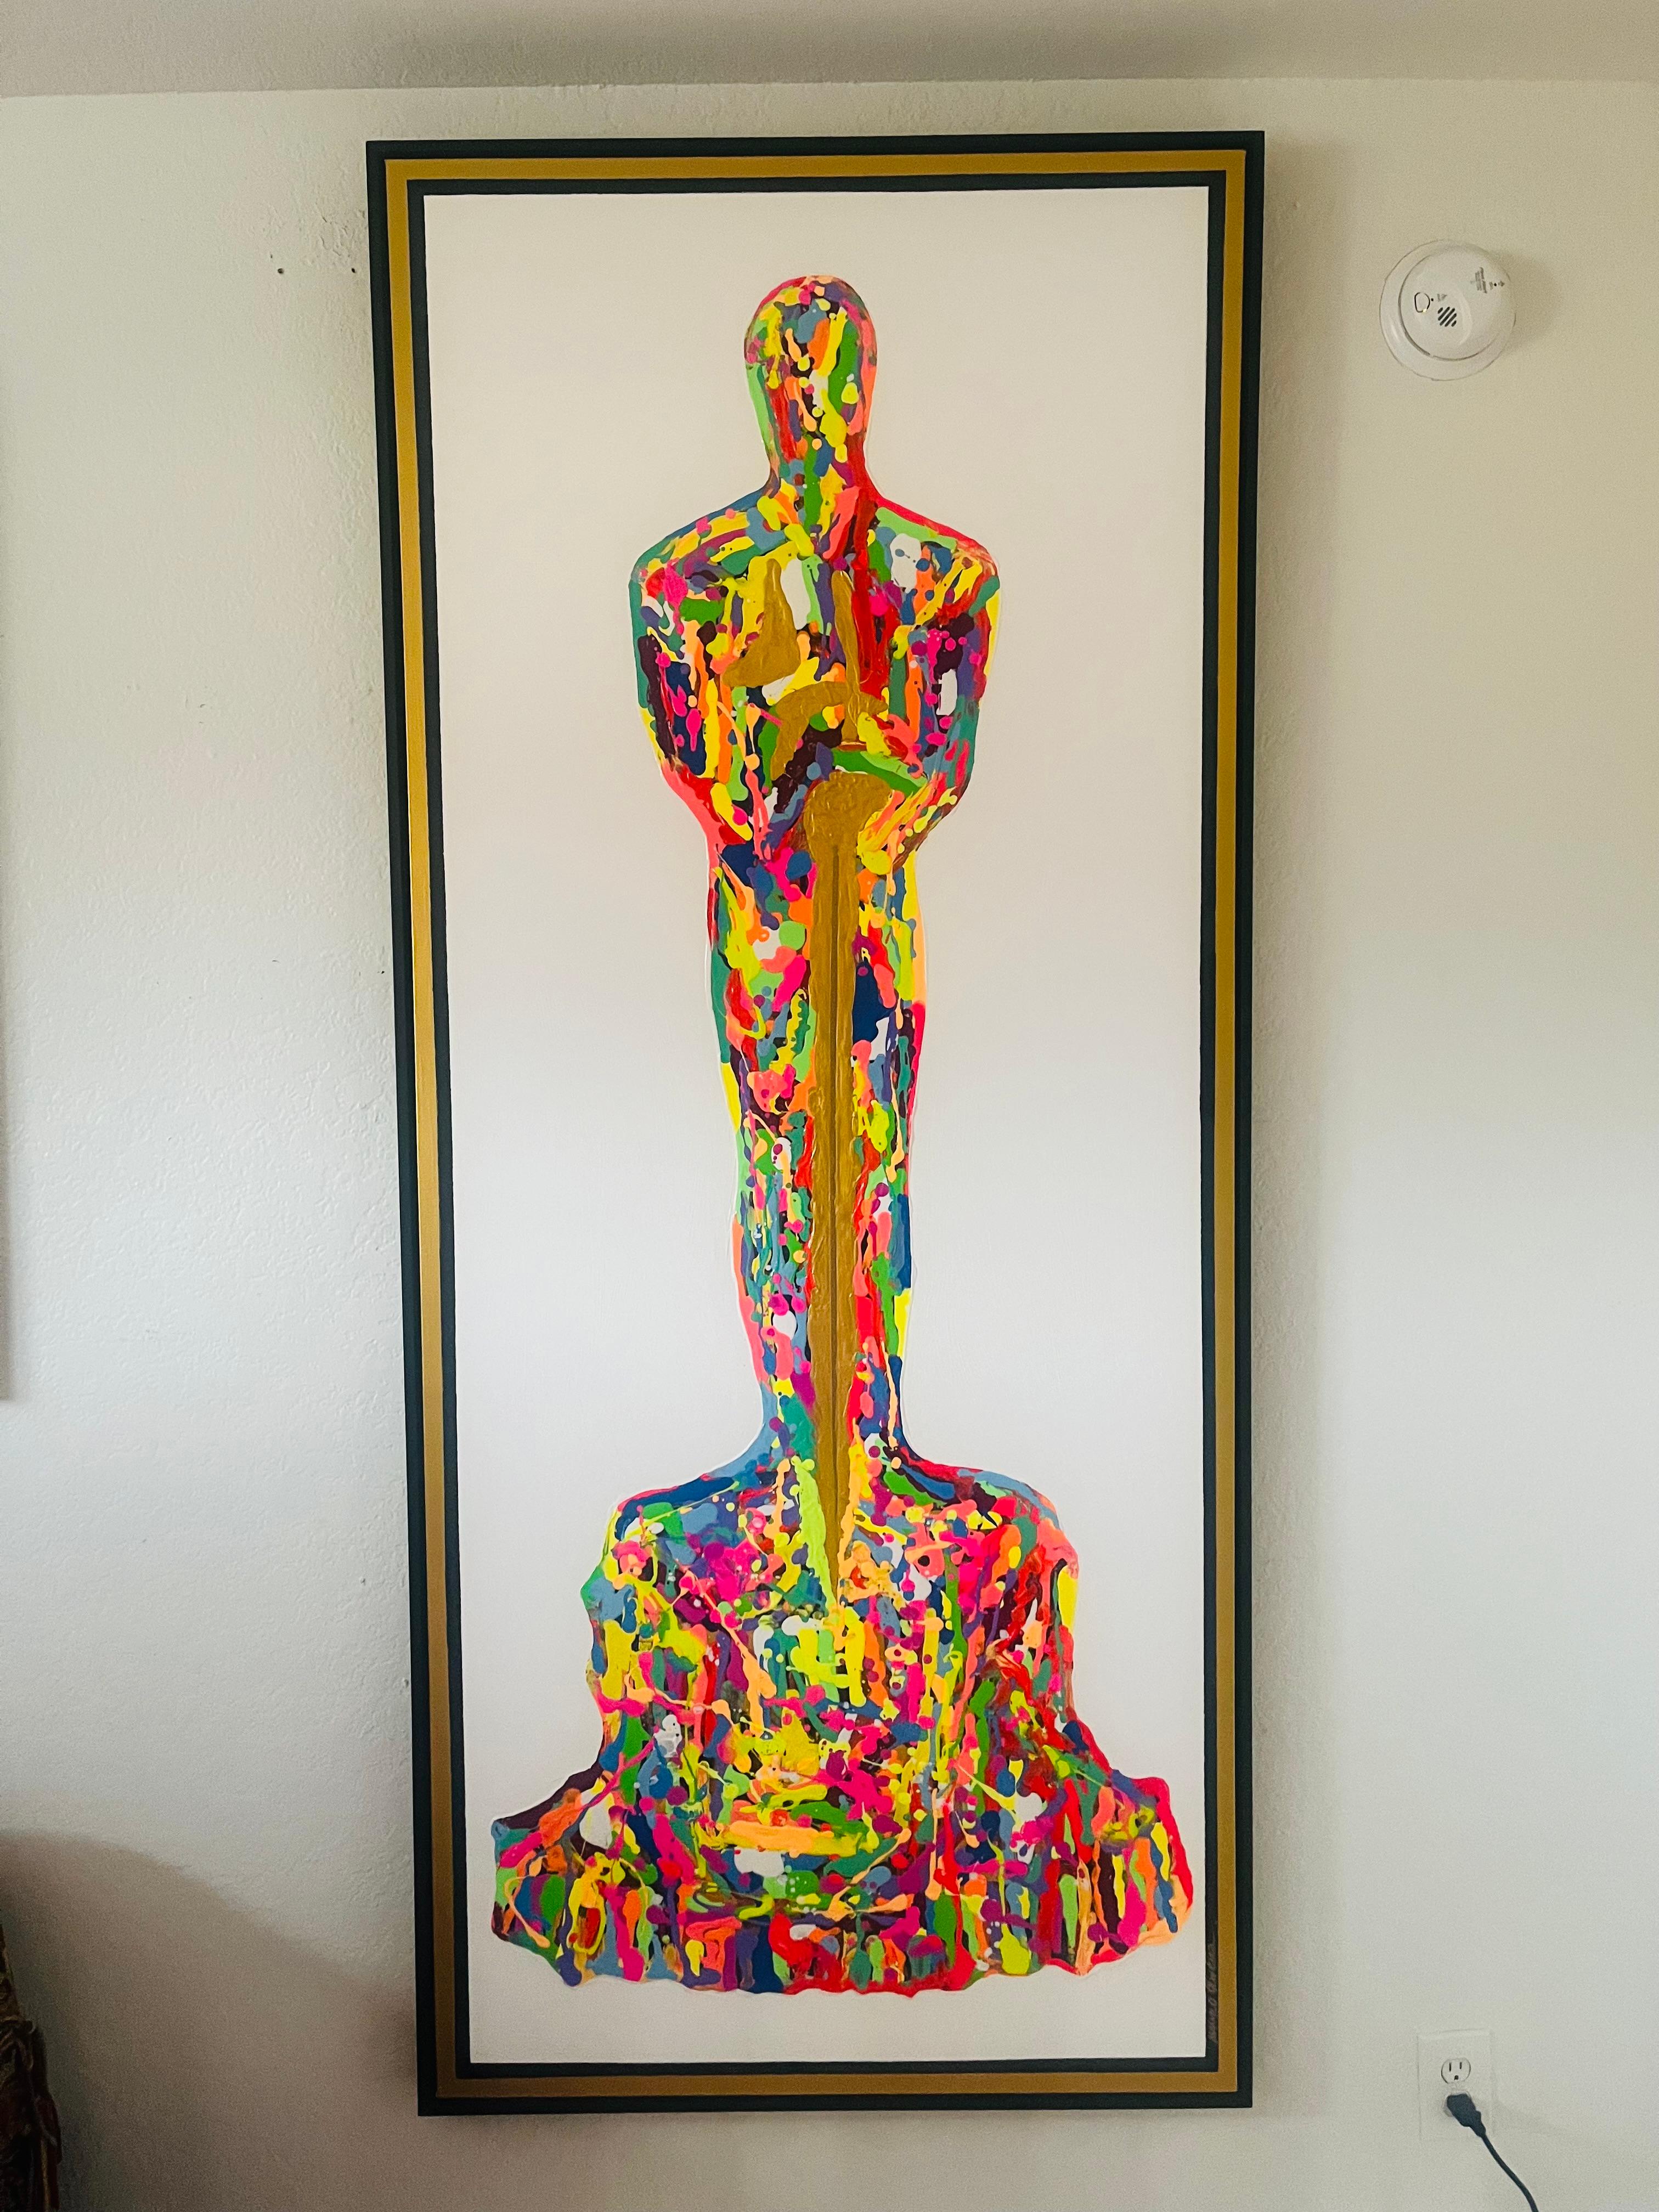 NEON Oscar (Original Framed Mixed Media Artwork) - Pop Art Painting by Mauro Oliveira